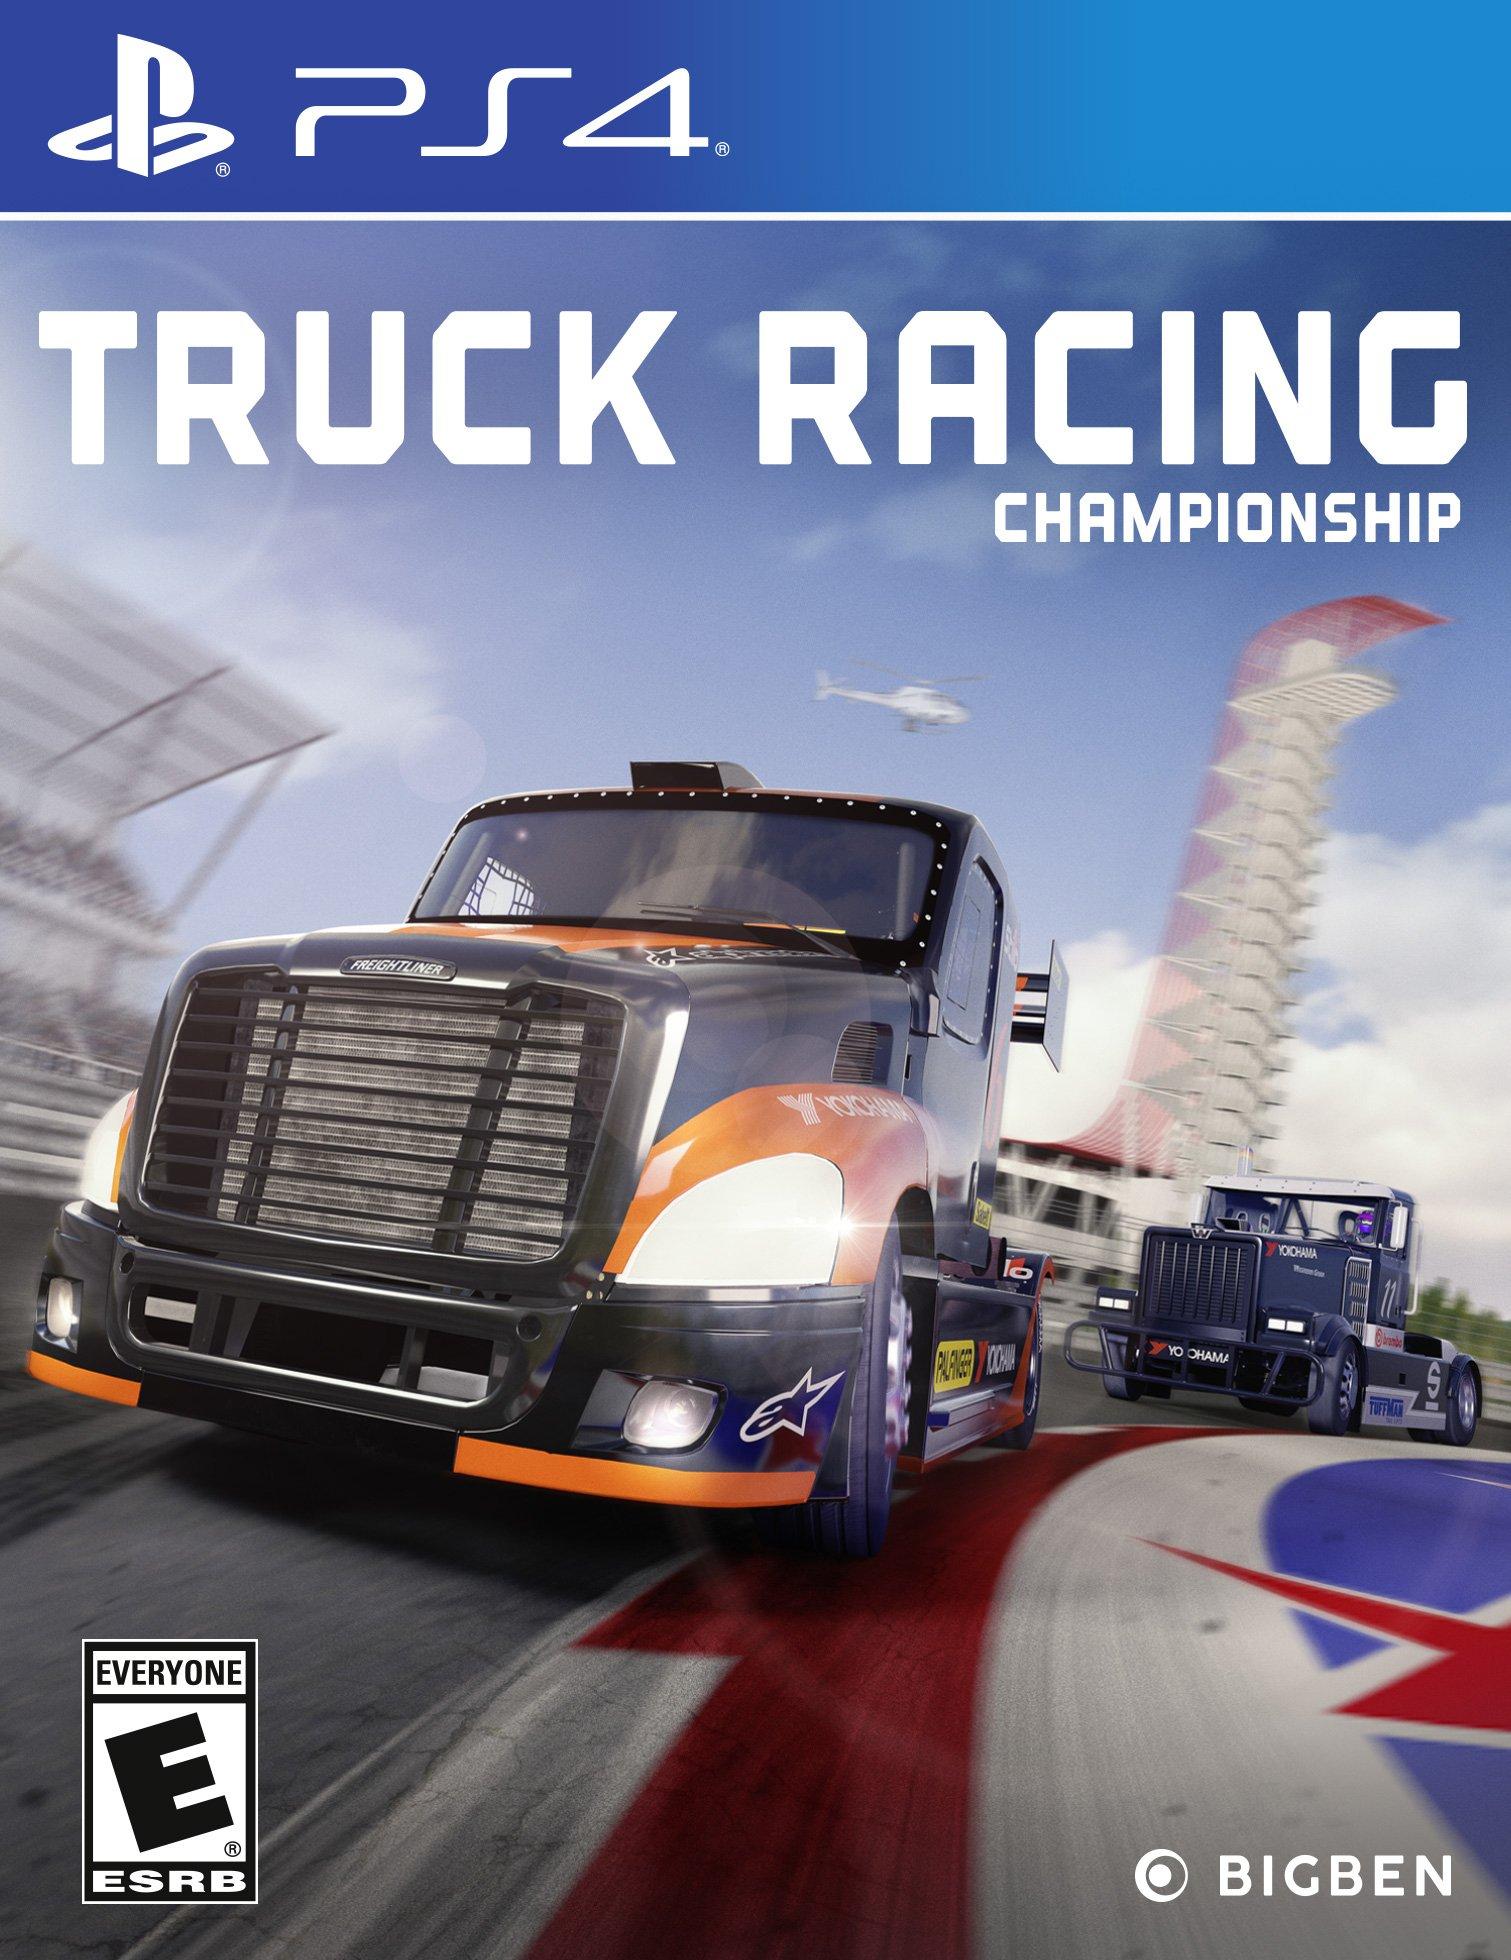 Truck Racing Championship Xbox One Mídia Digital - RIOS VARIEDADES